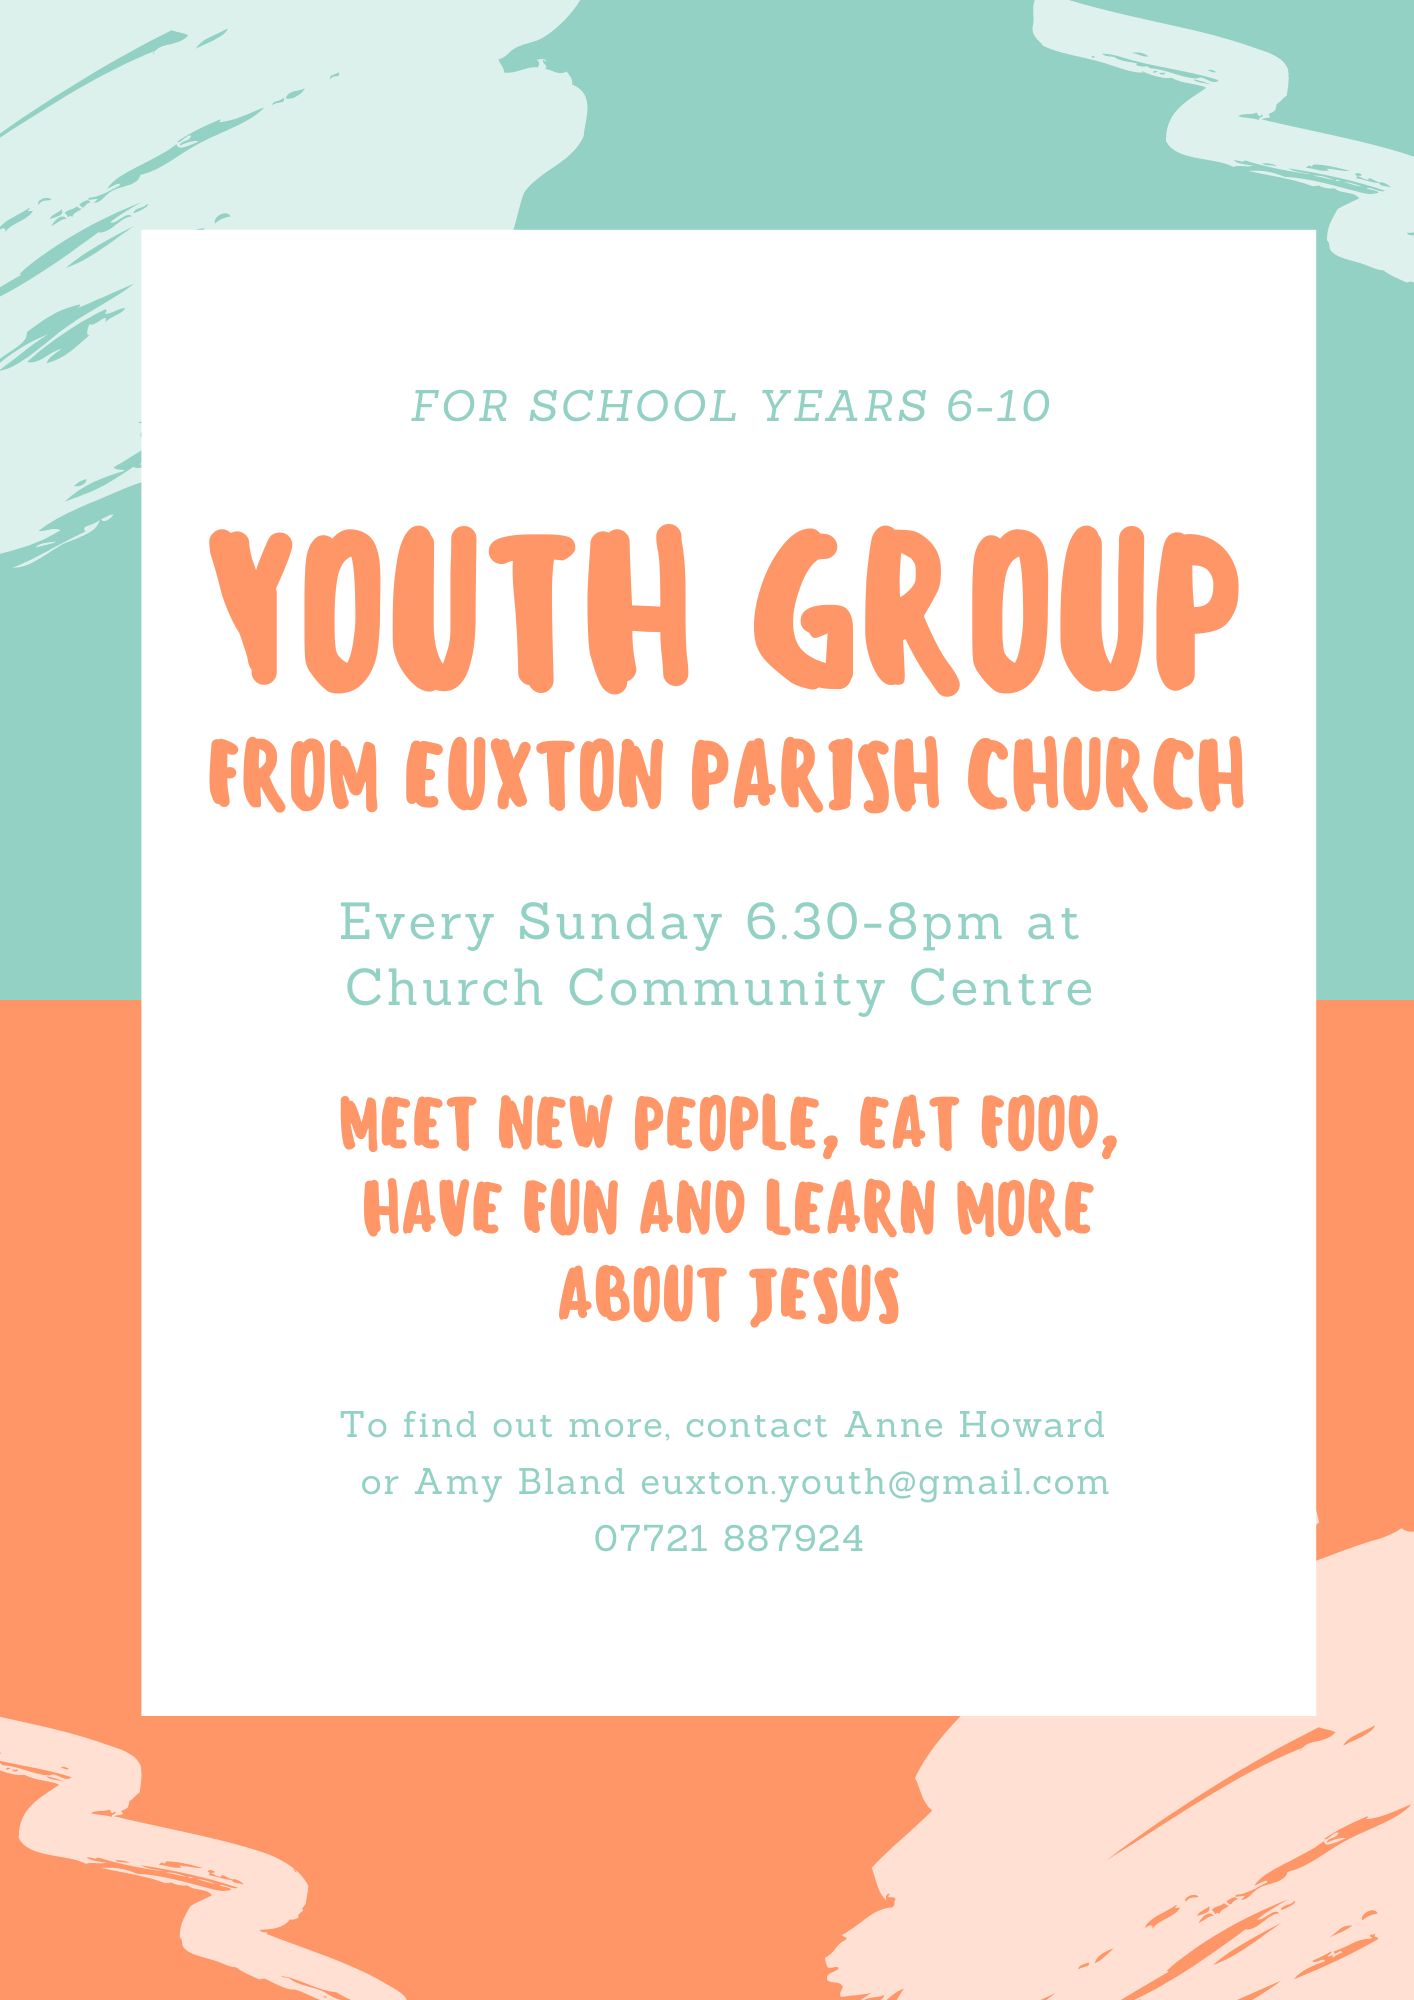 Euxton Parish Church Youth Group